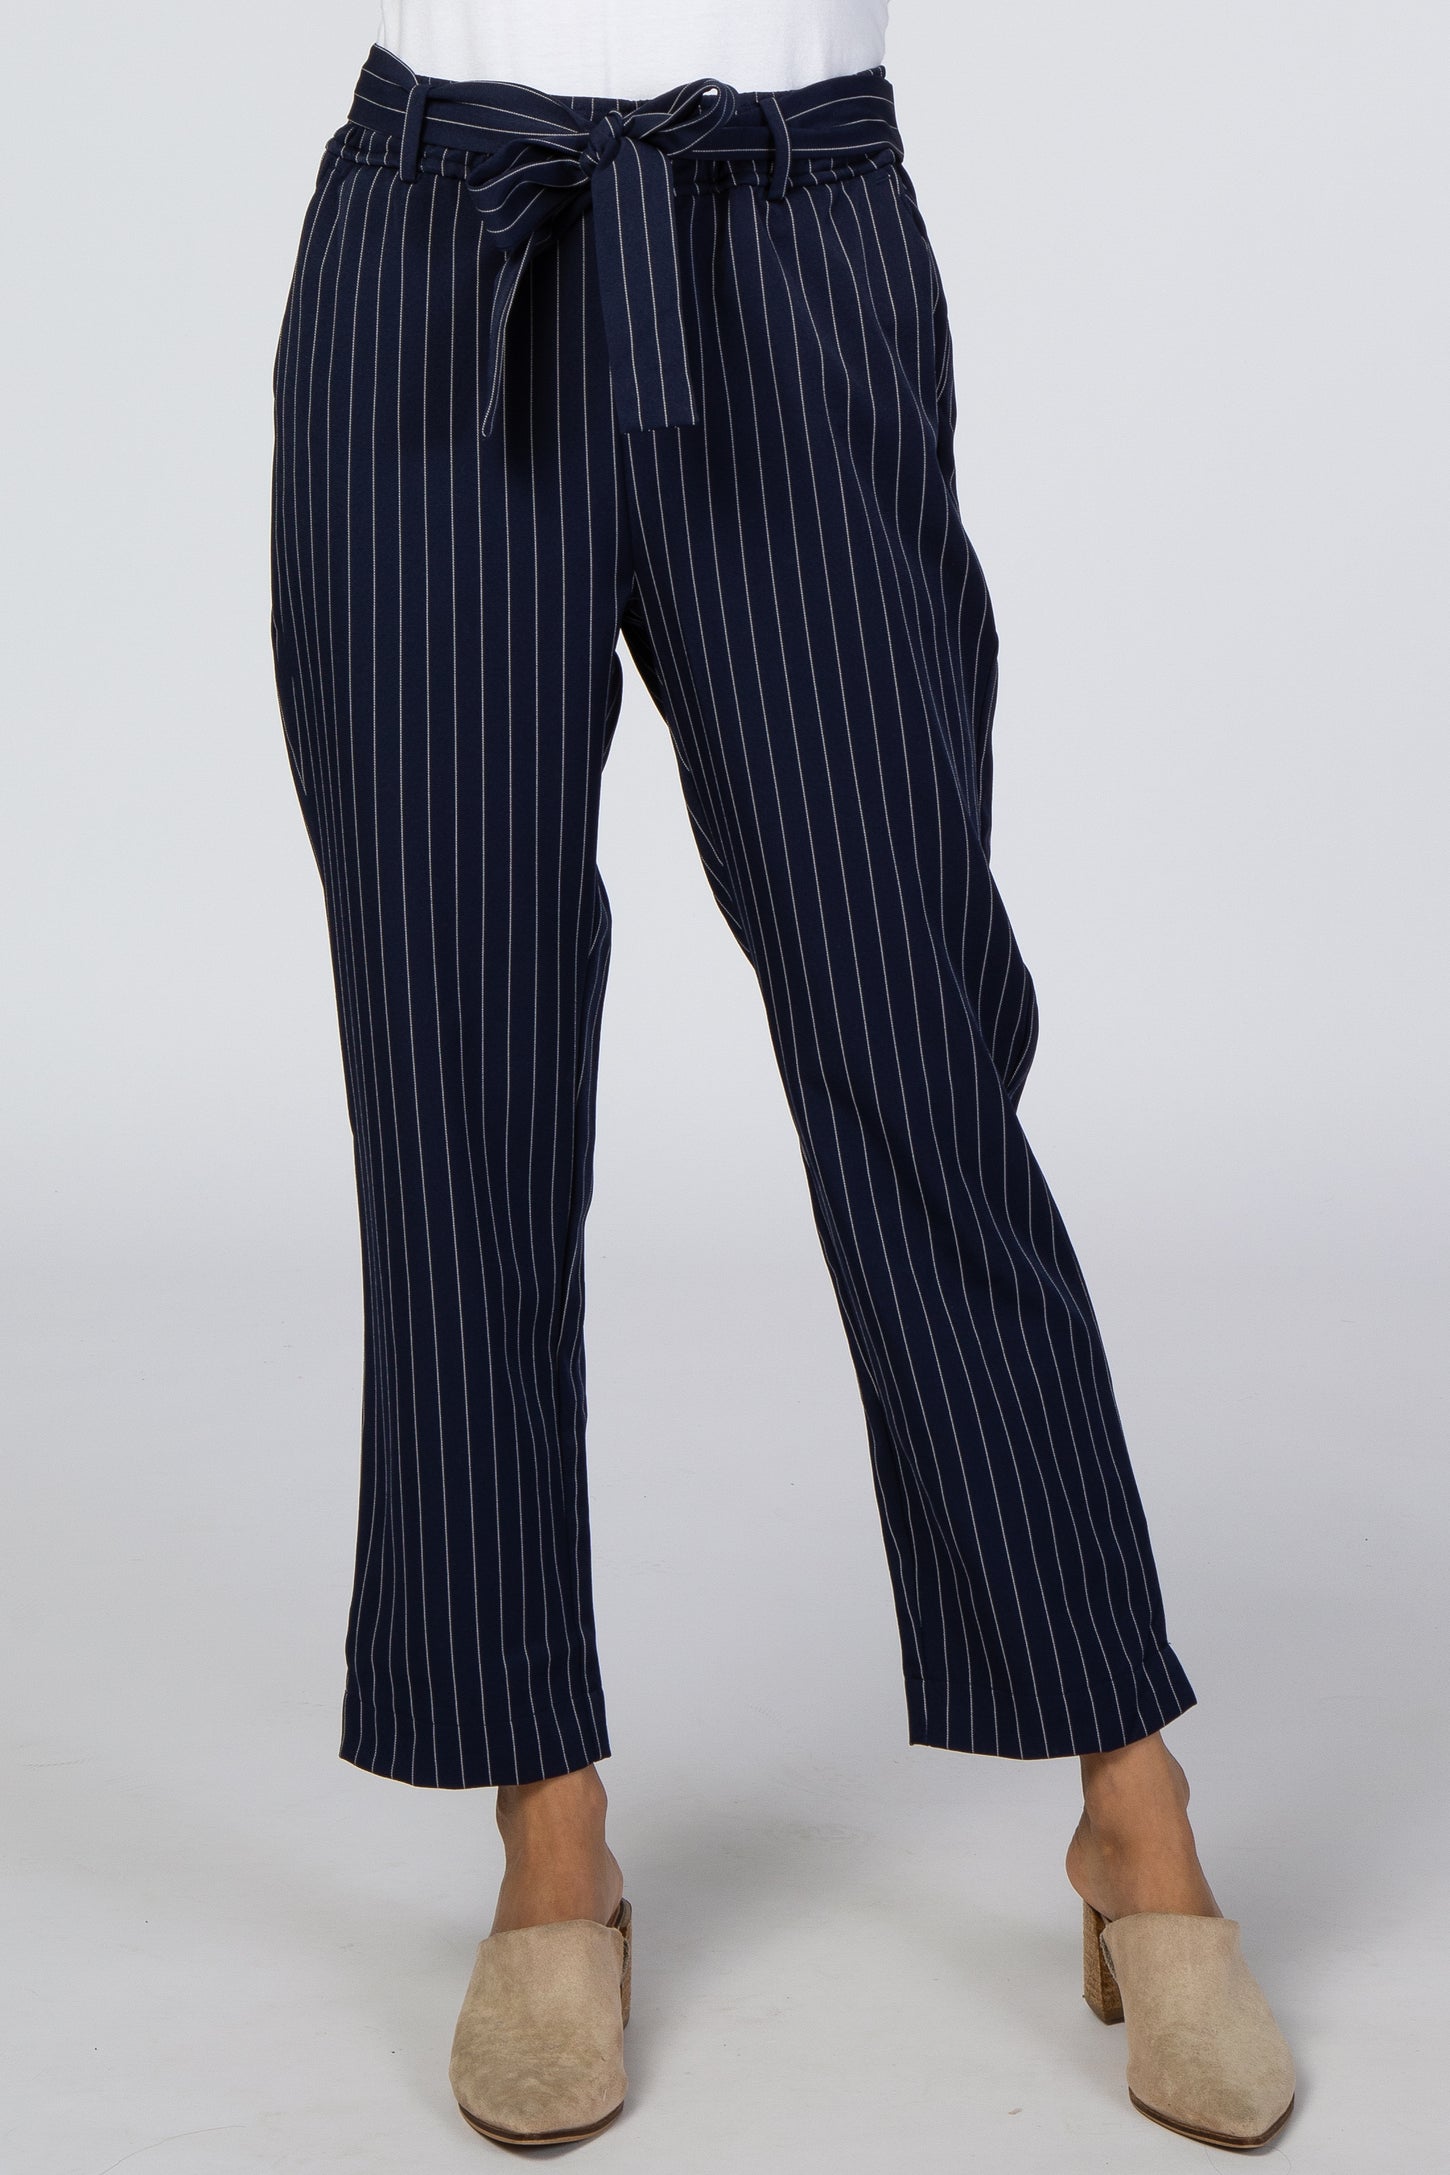 Navy Blue Pinstripe Front Tie Pants